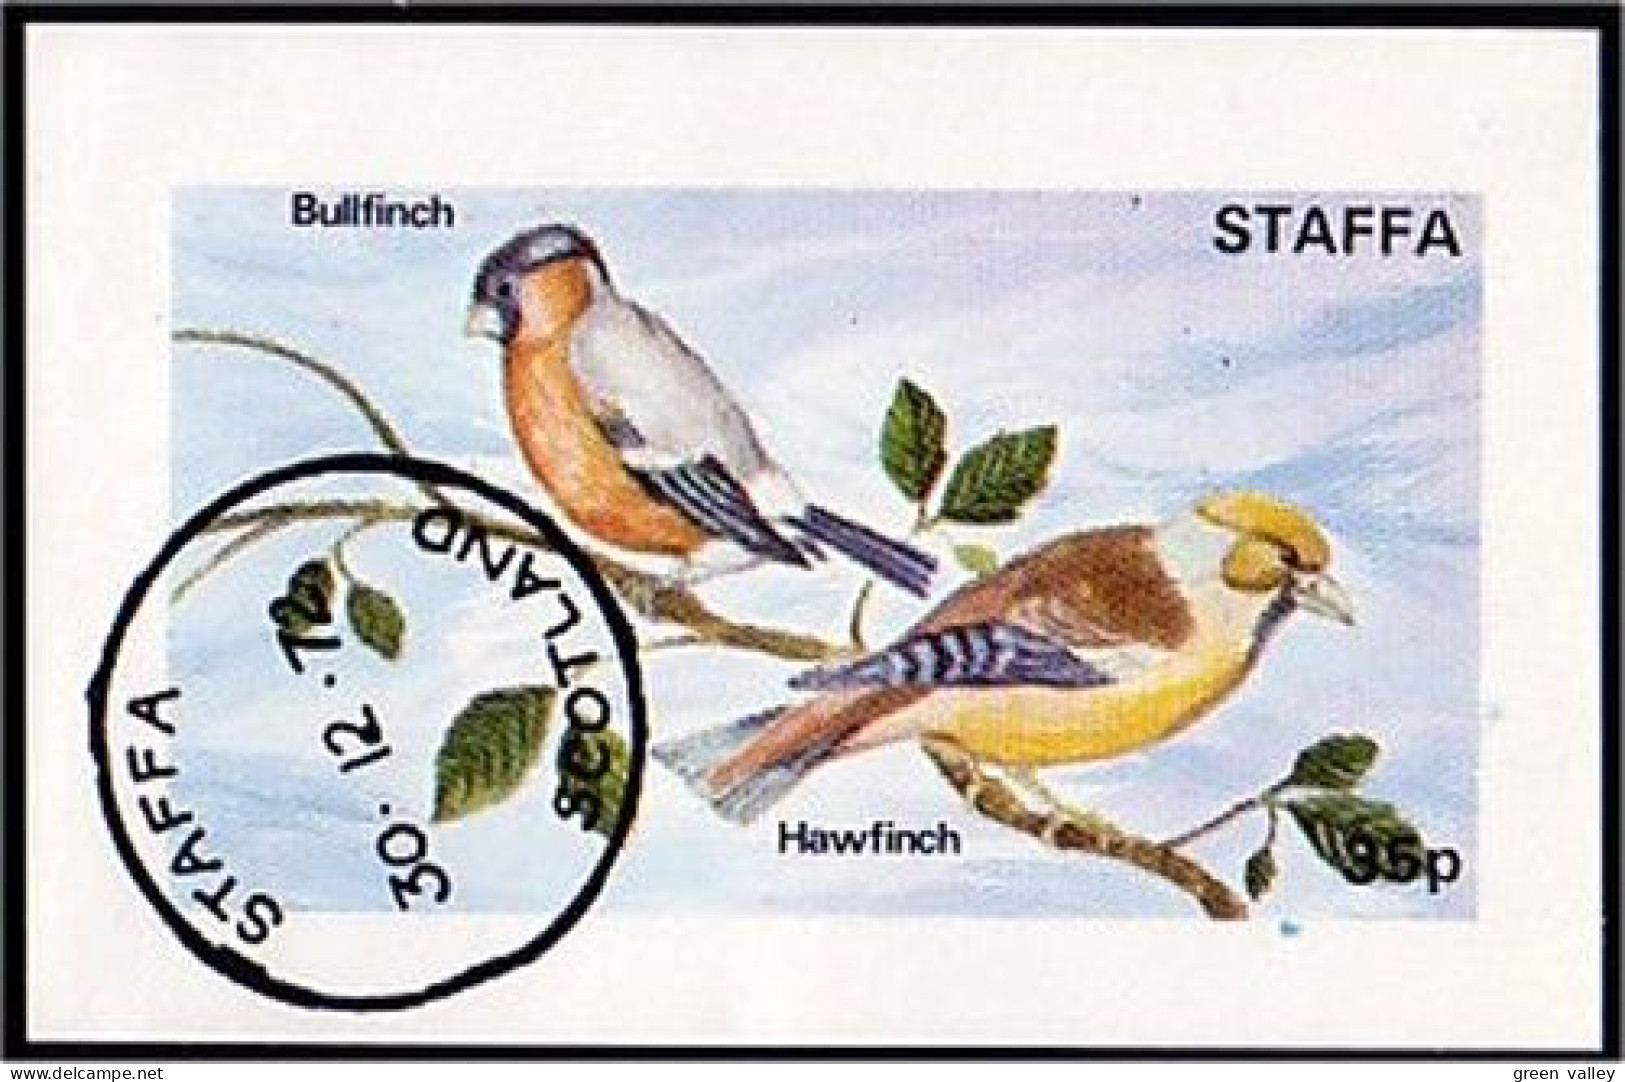 Staffa Scotland Hakfinch Bullfinch (A51-239c) - Local Issues